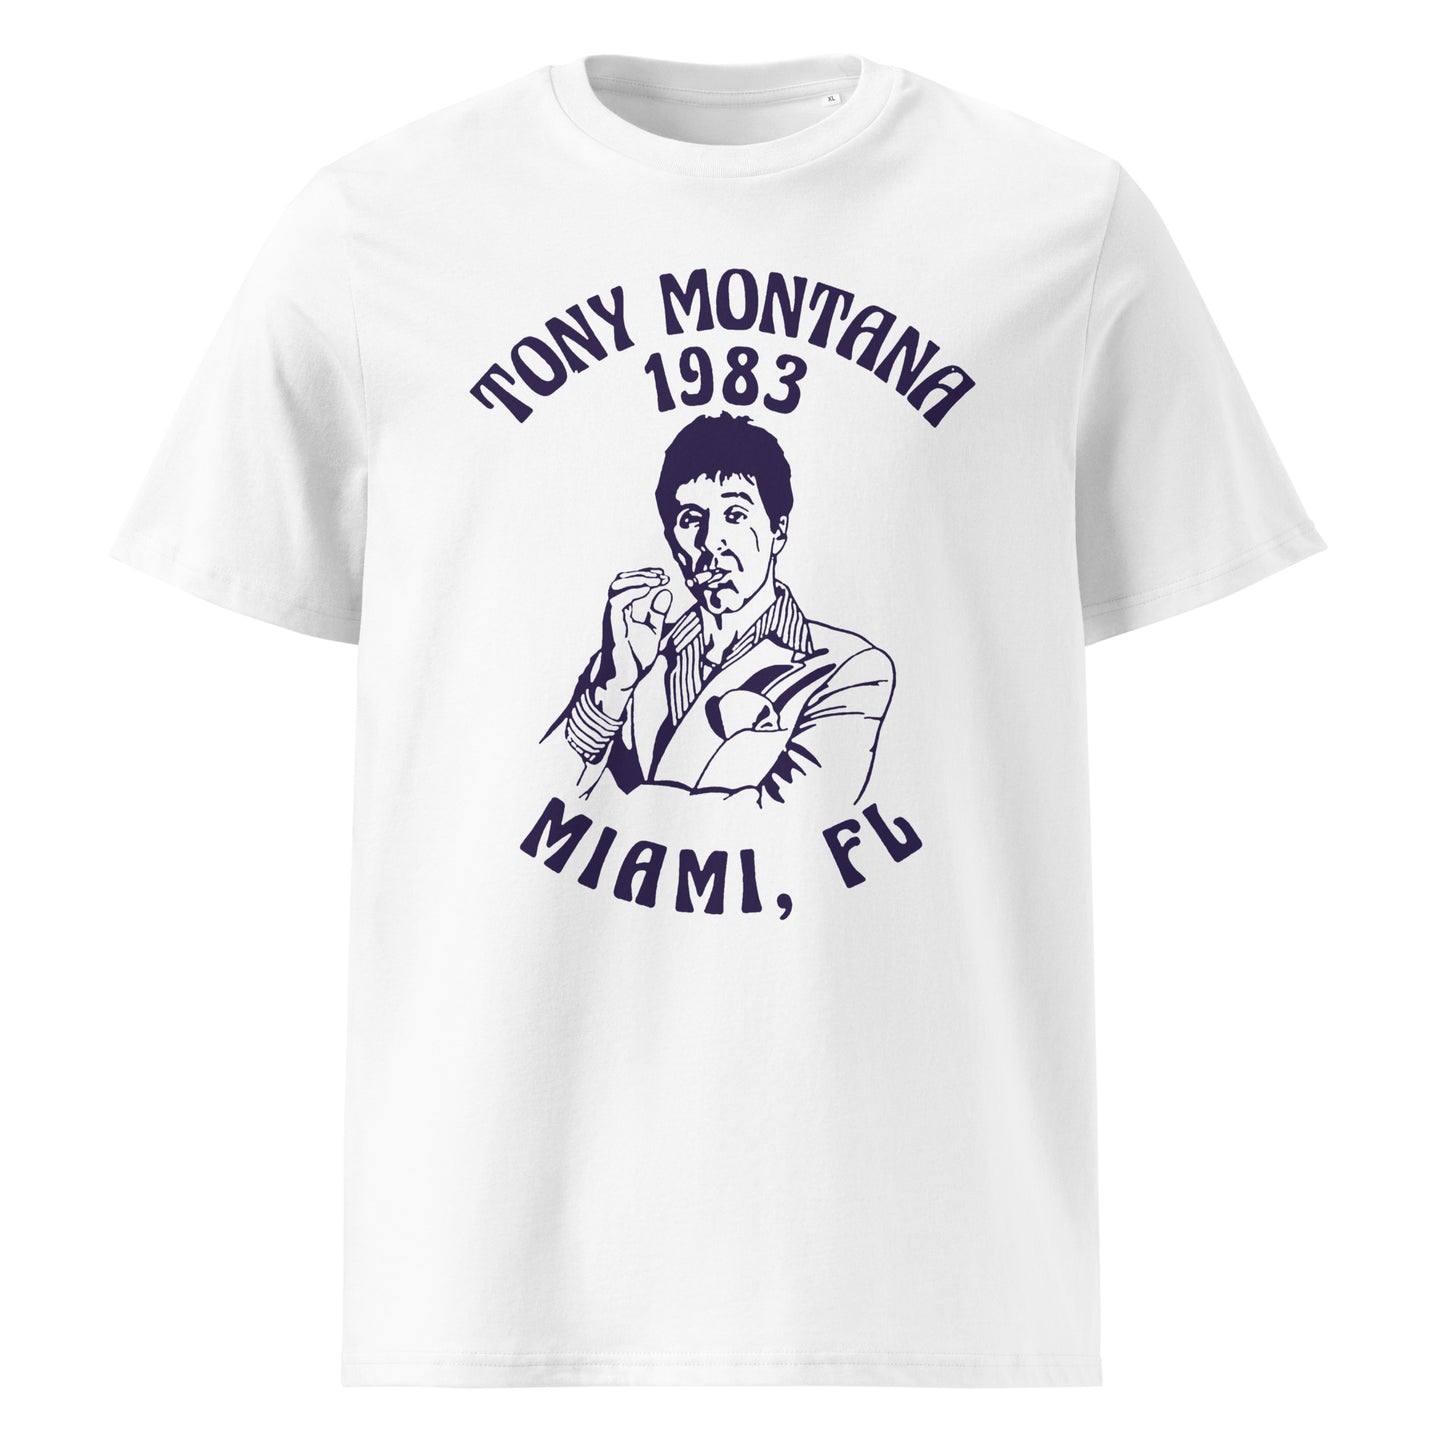 TONY MONTANA 1983 - Unisex organic cotton t-shirt